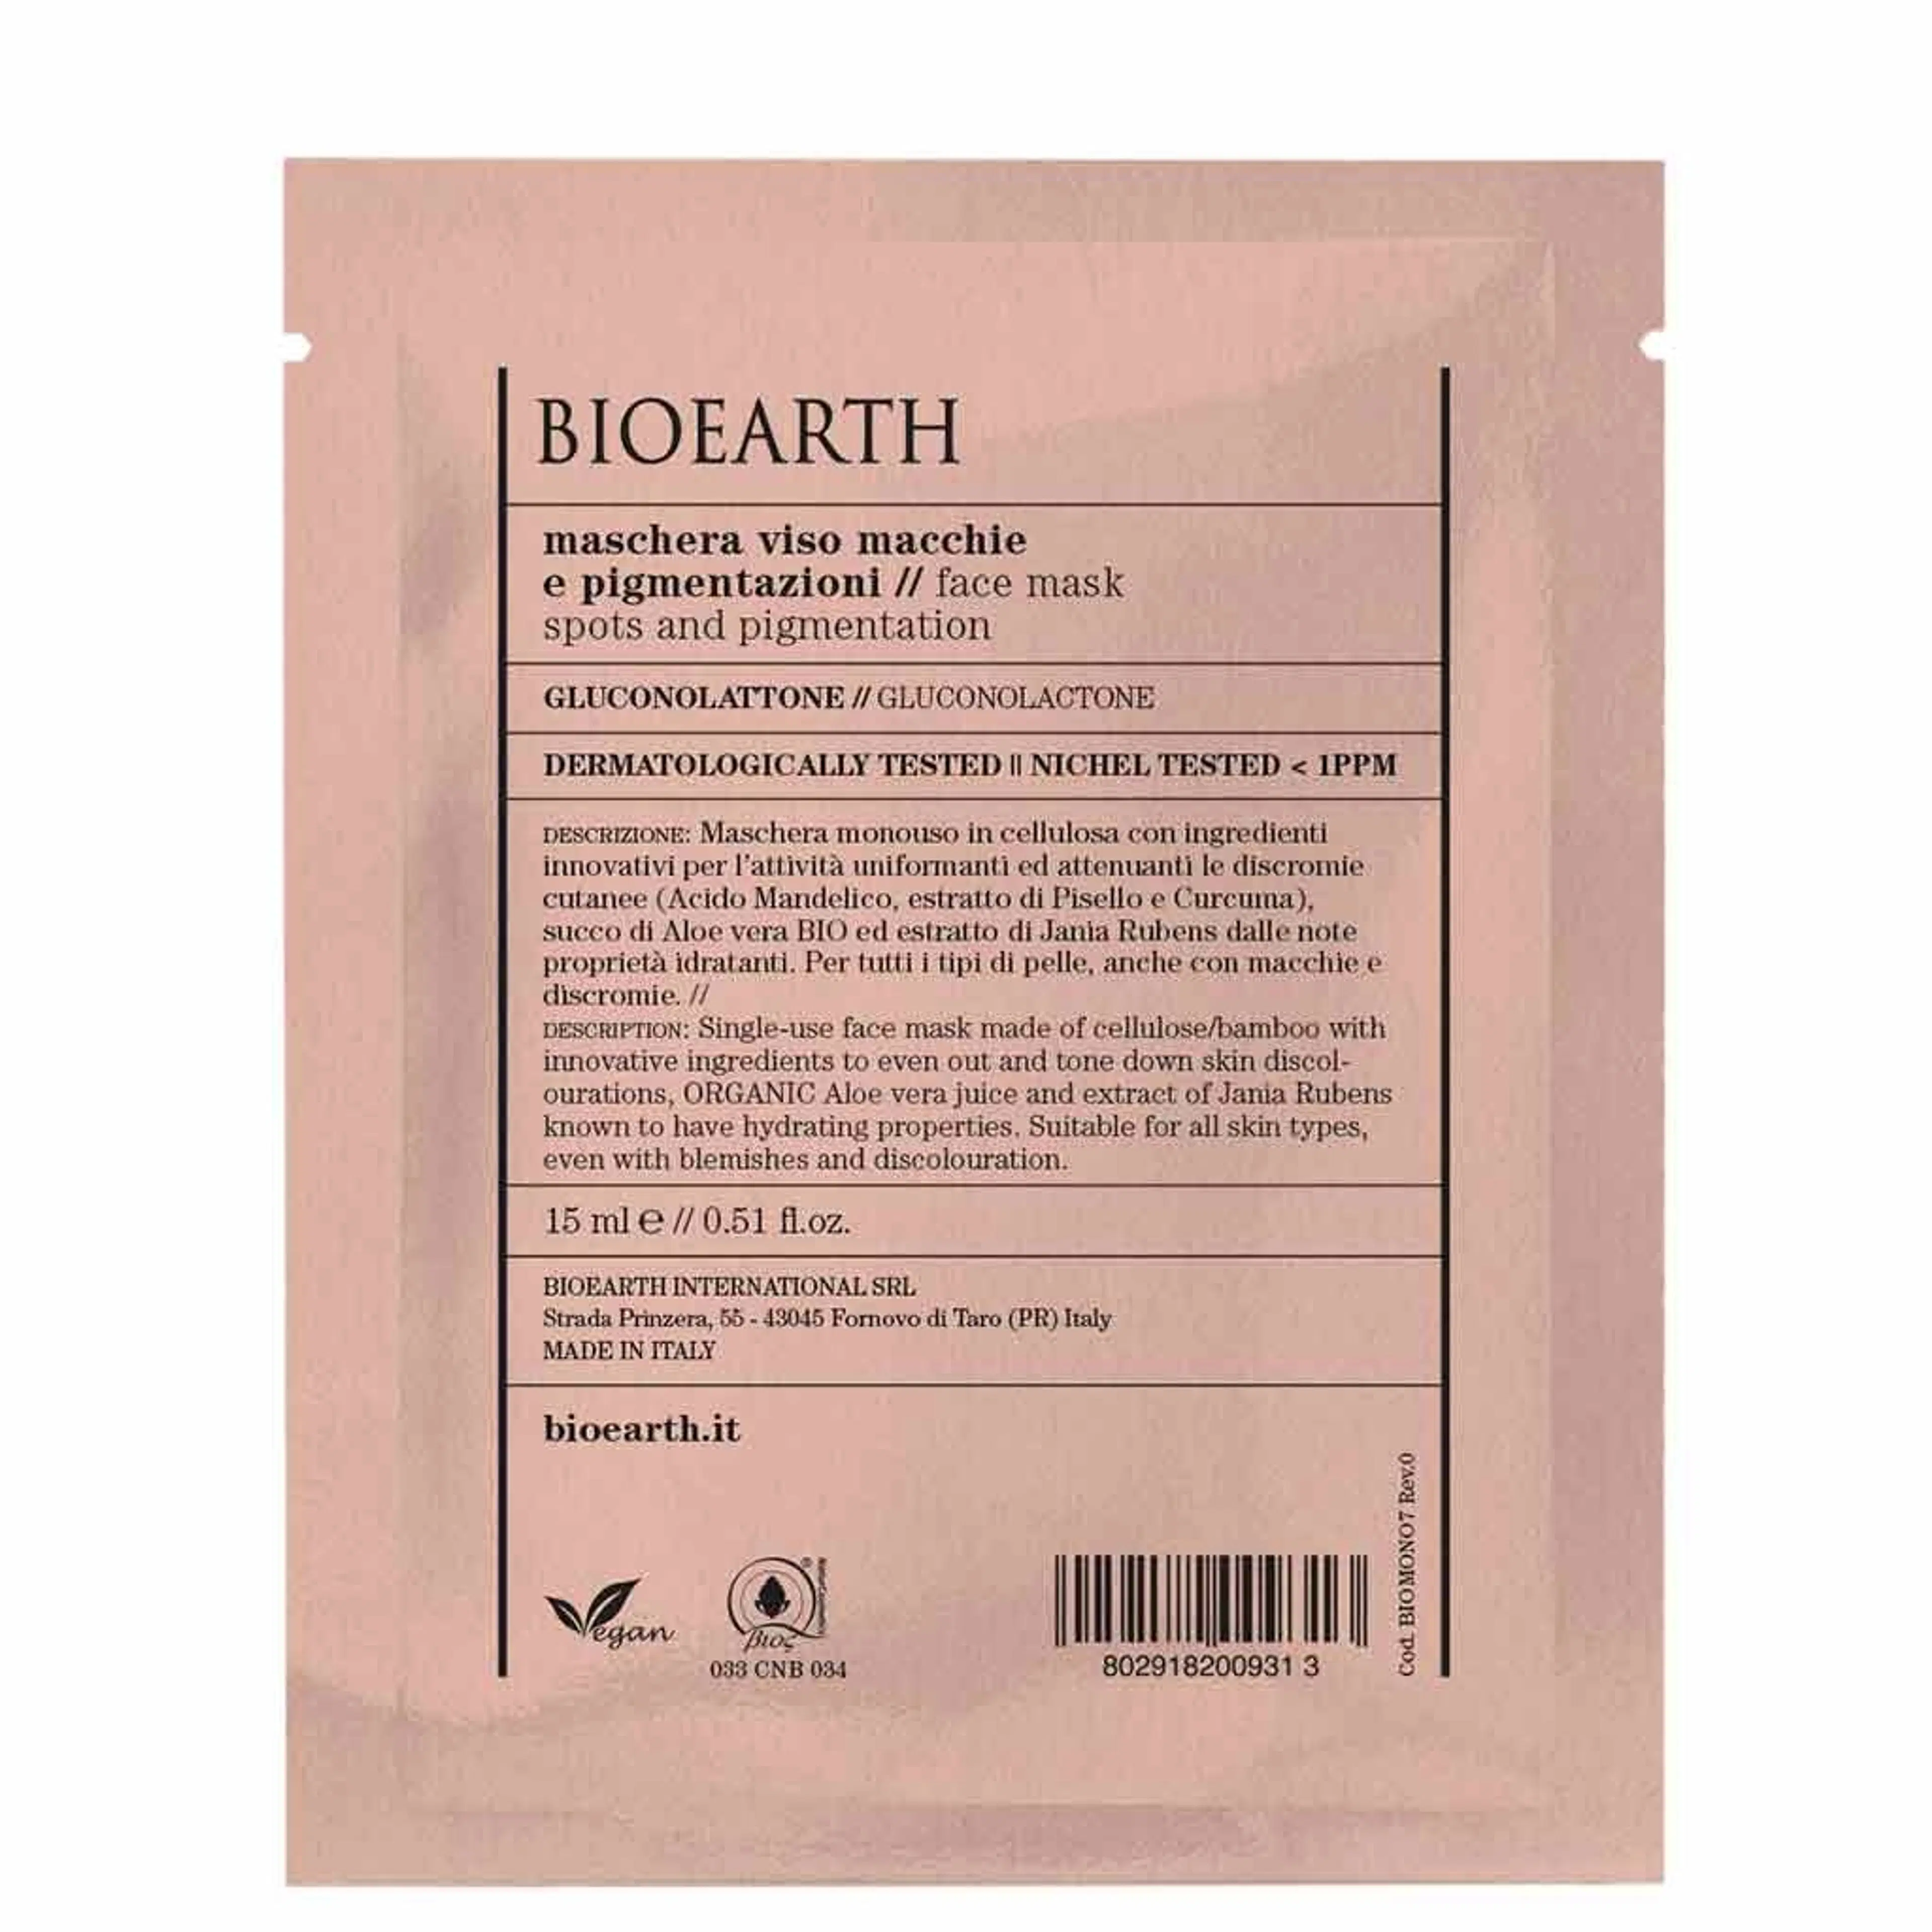 Bioearth Face Sheet Mask Spots And Pigmentation 15ml - Gluconolactone